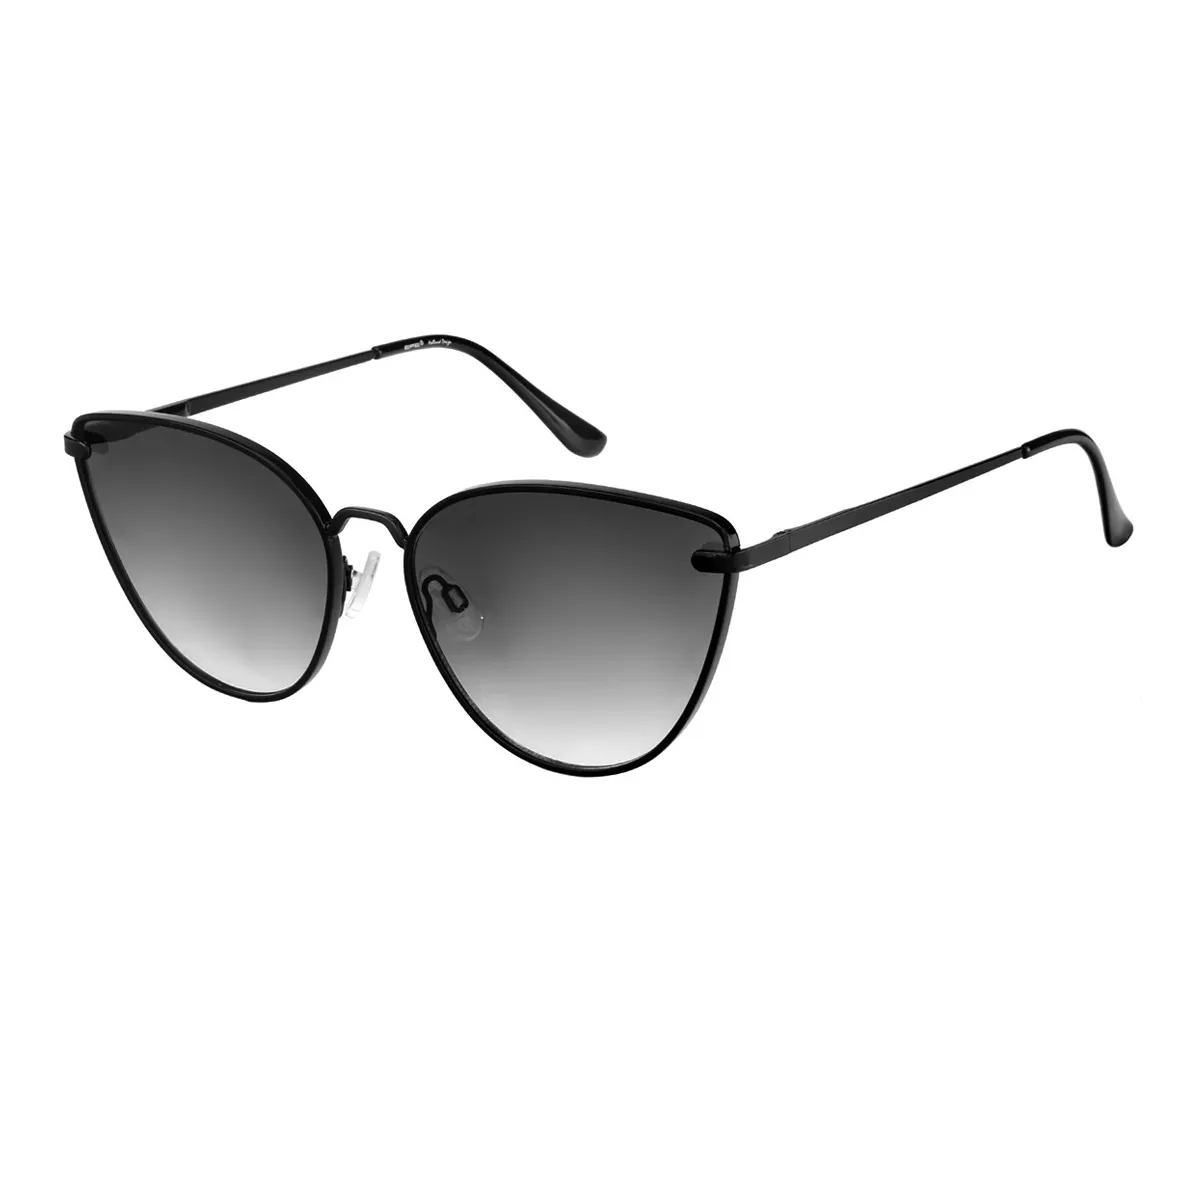 Alina - Cat-eye Black Sunglasses for Women